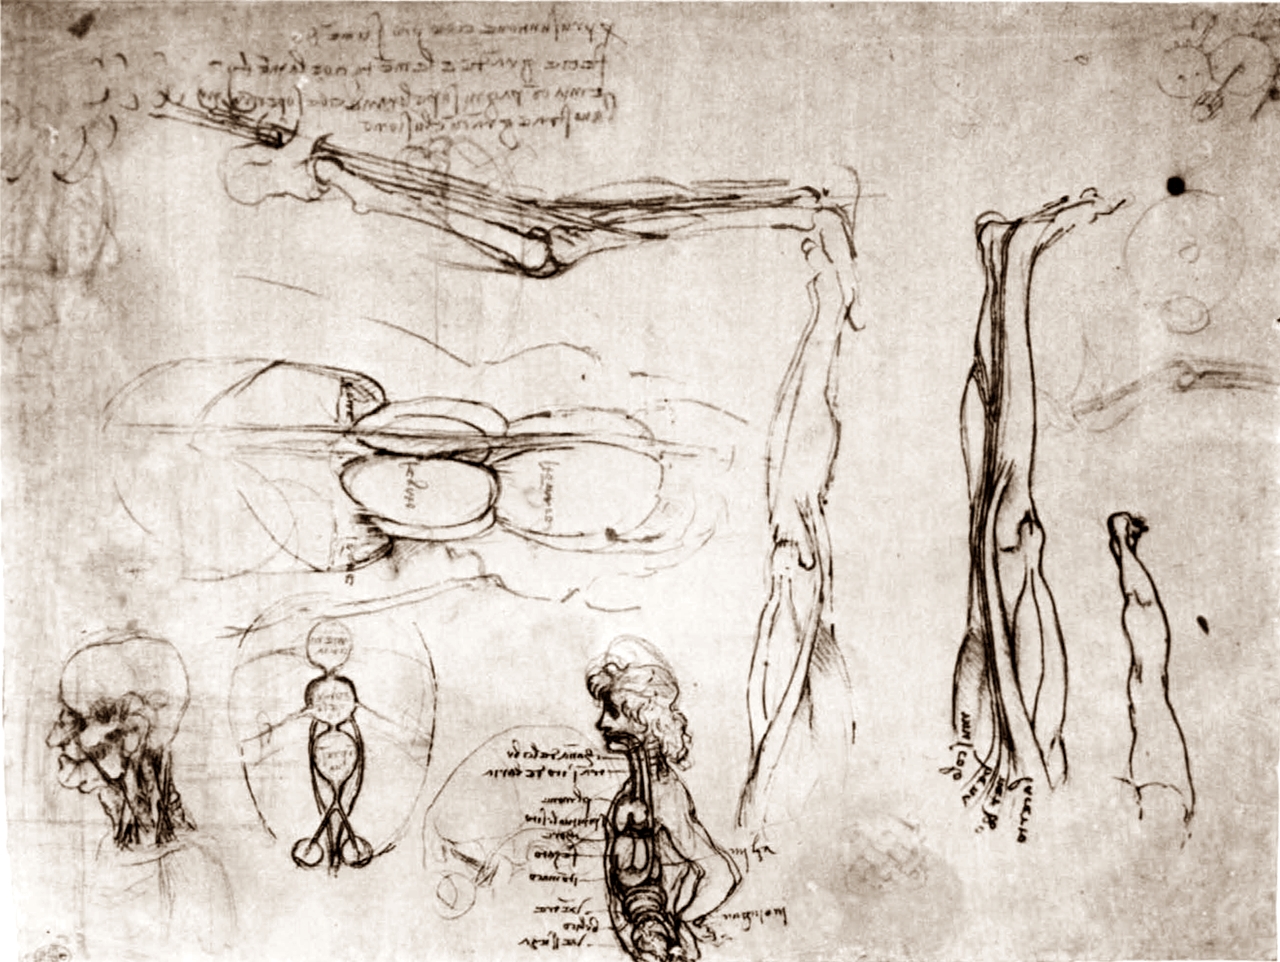 Leonardo+da+Vinci-1452-1519 (746).jpg